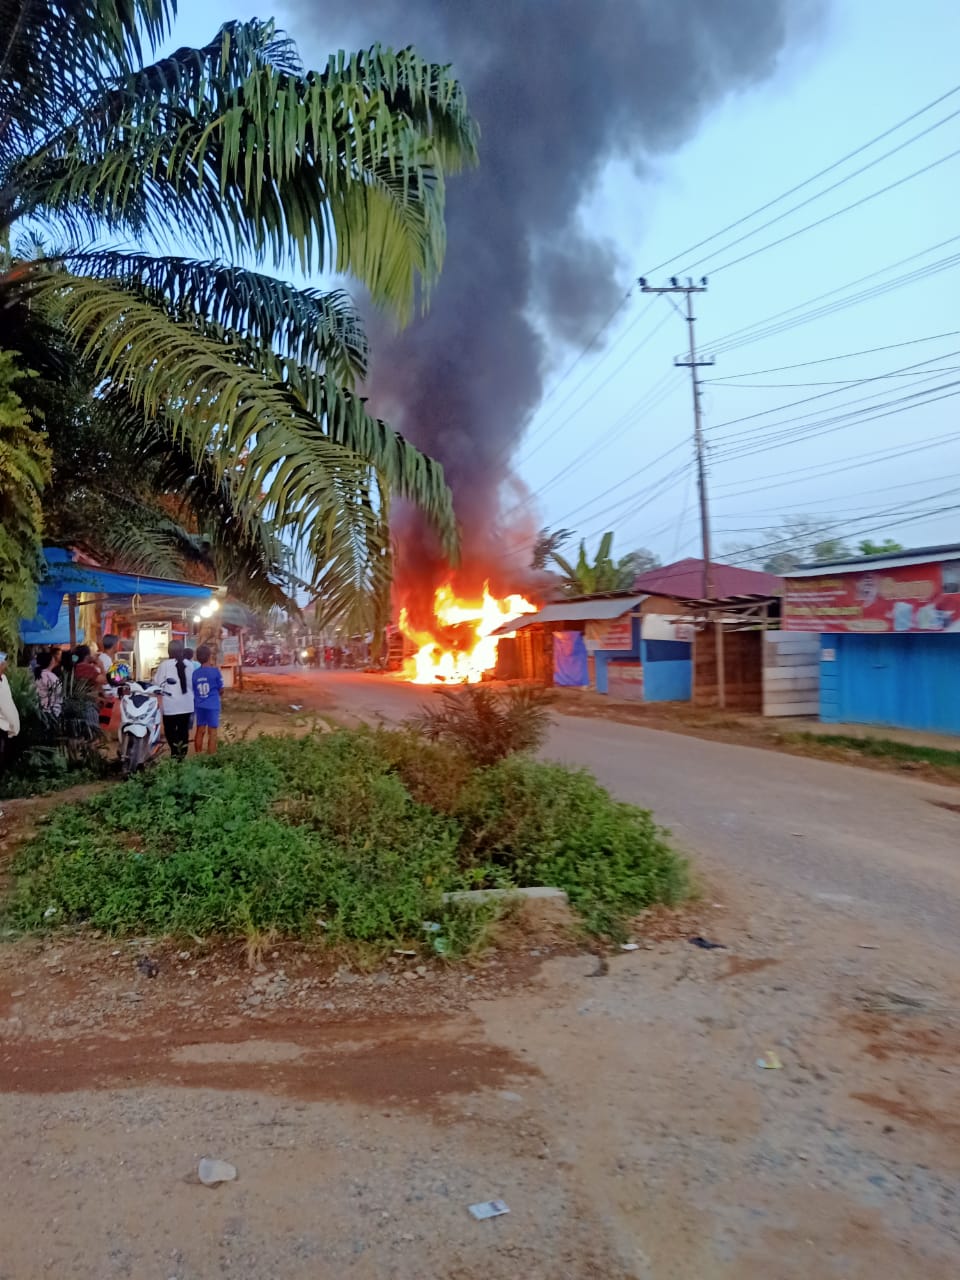 Gara-gara Api Rokok Menyambar BBM, 2 Warung di Bungo Ludes Terbakar